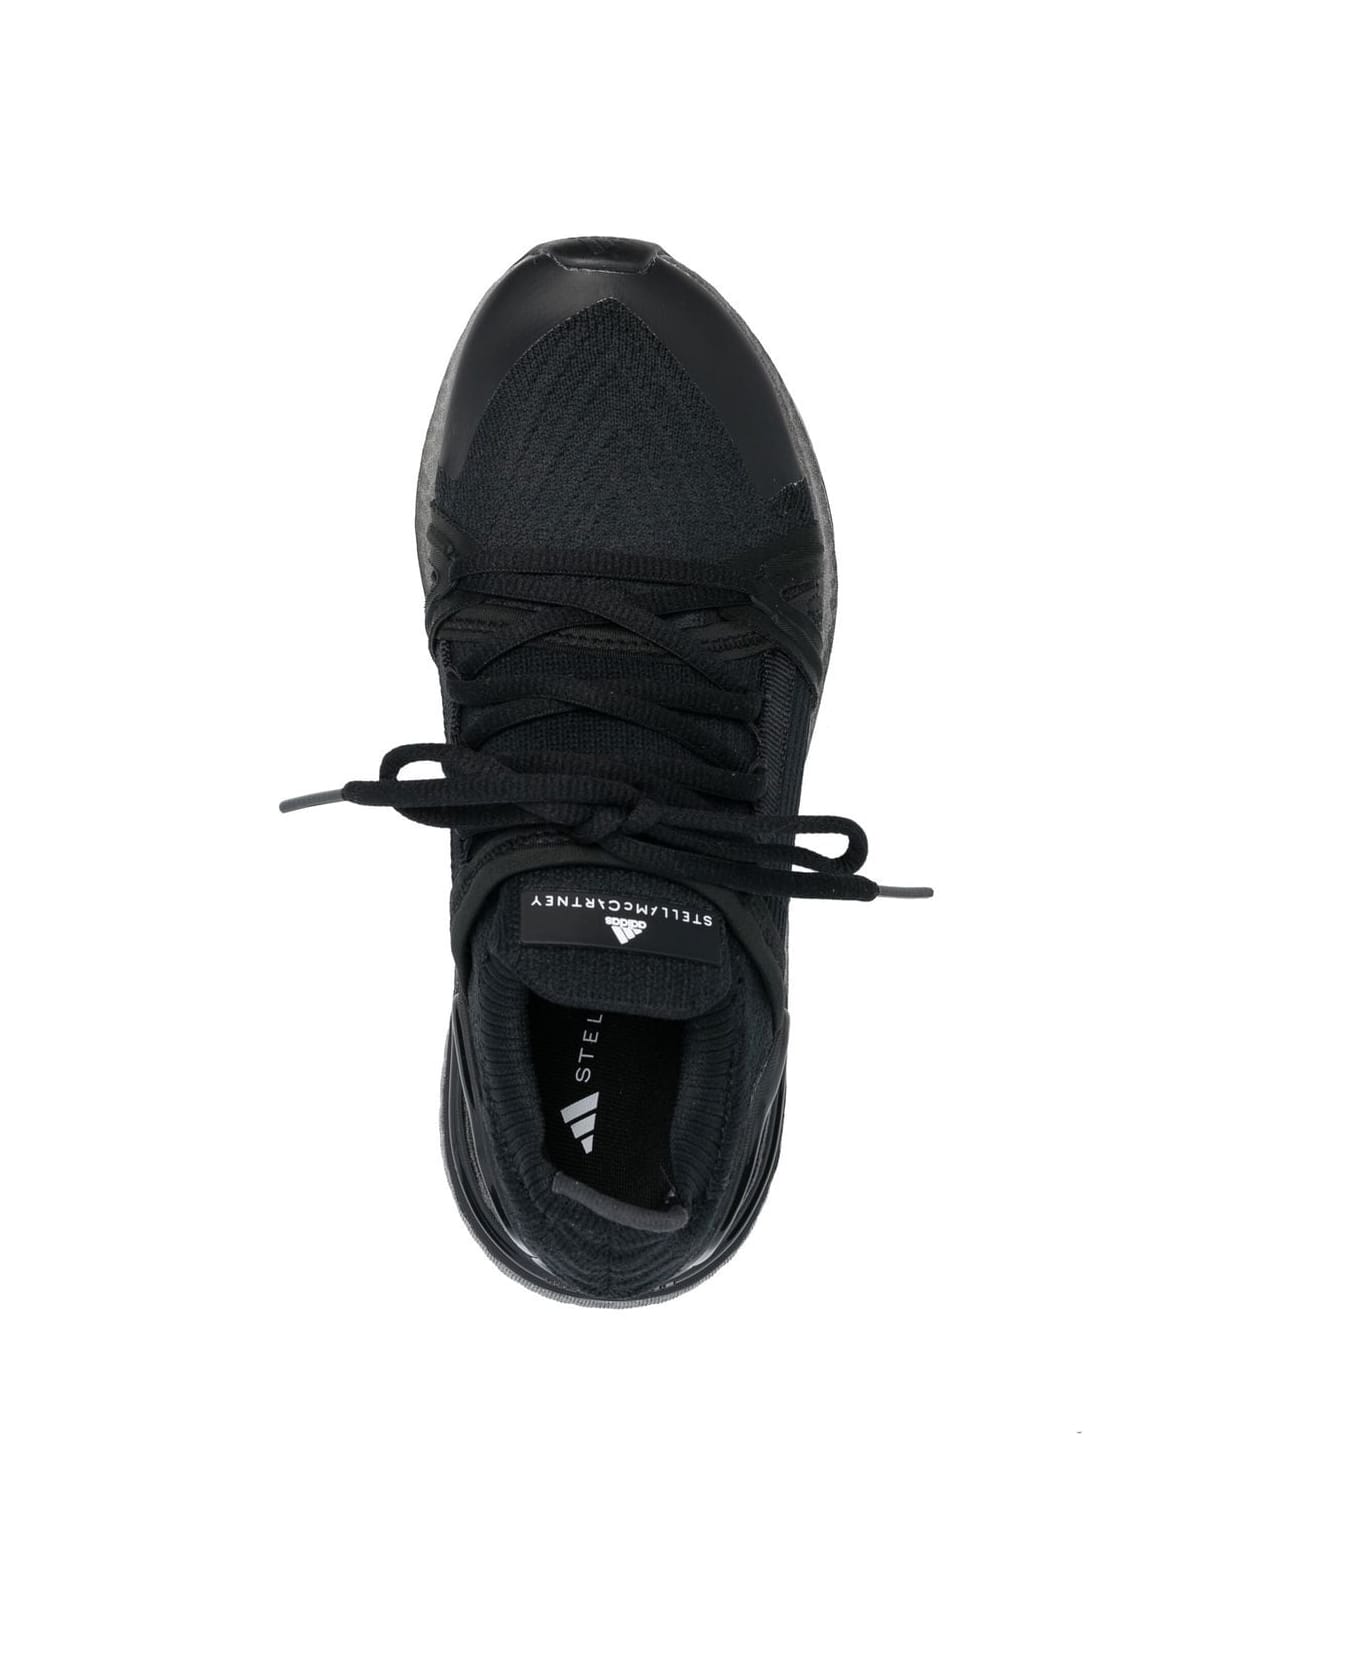 Adidas by Stella McCartney Asmc Ultraboost 20 Sneakers - Cblack Cblack Cblack